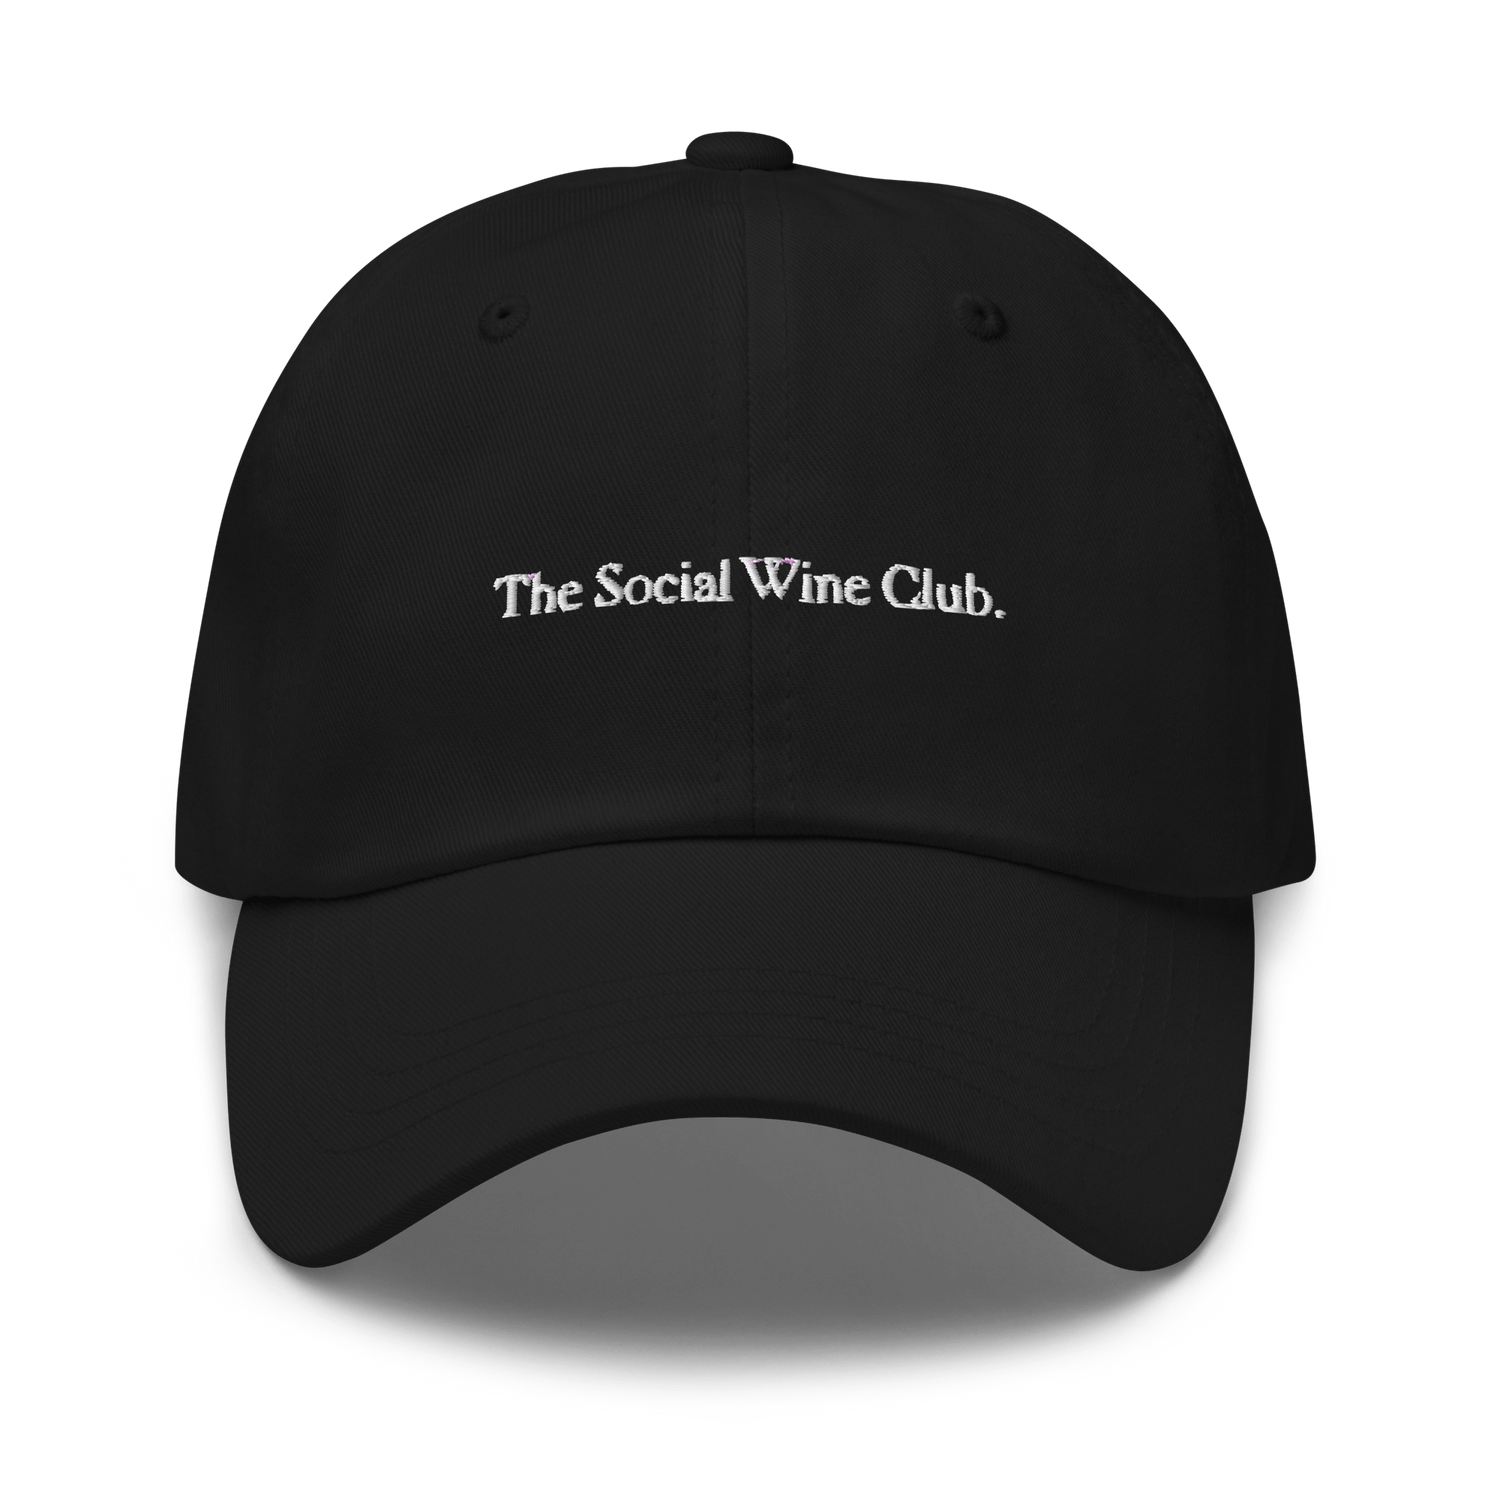 The Social Wine Club. Dad hat